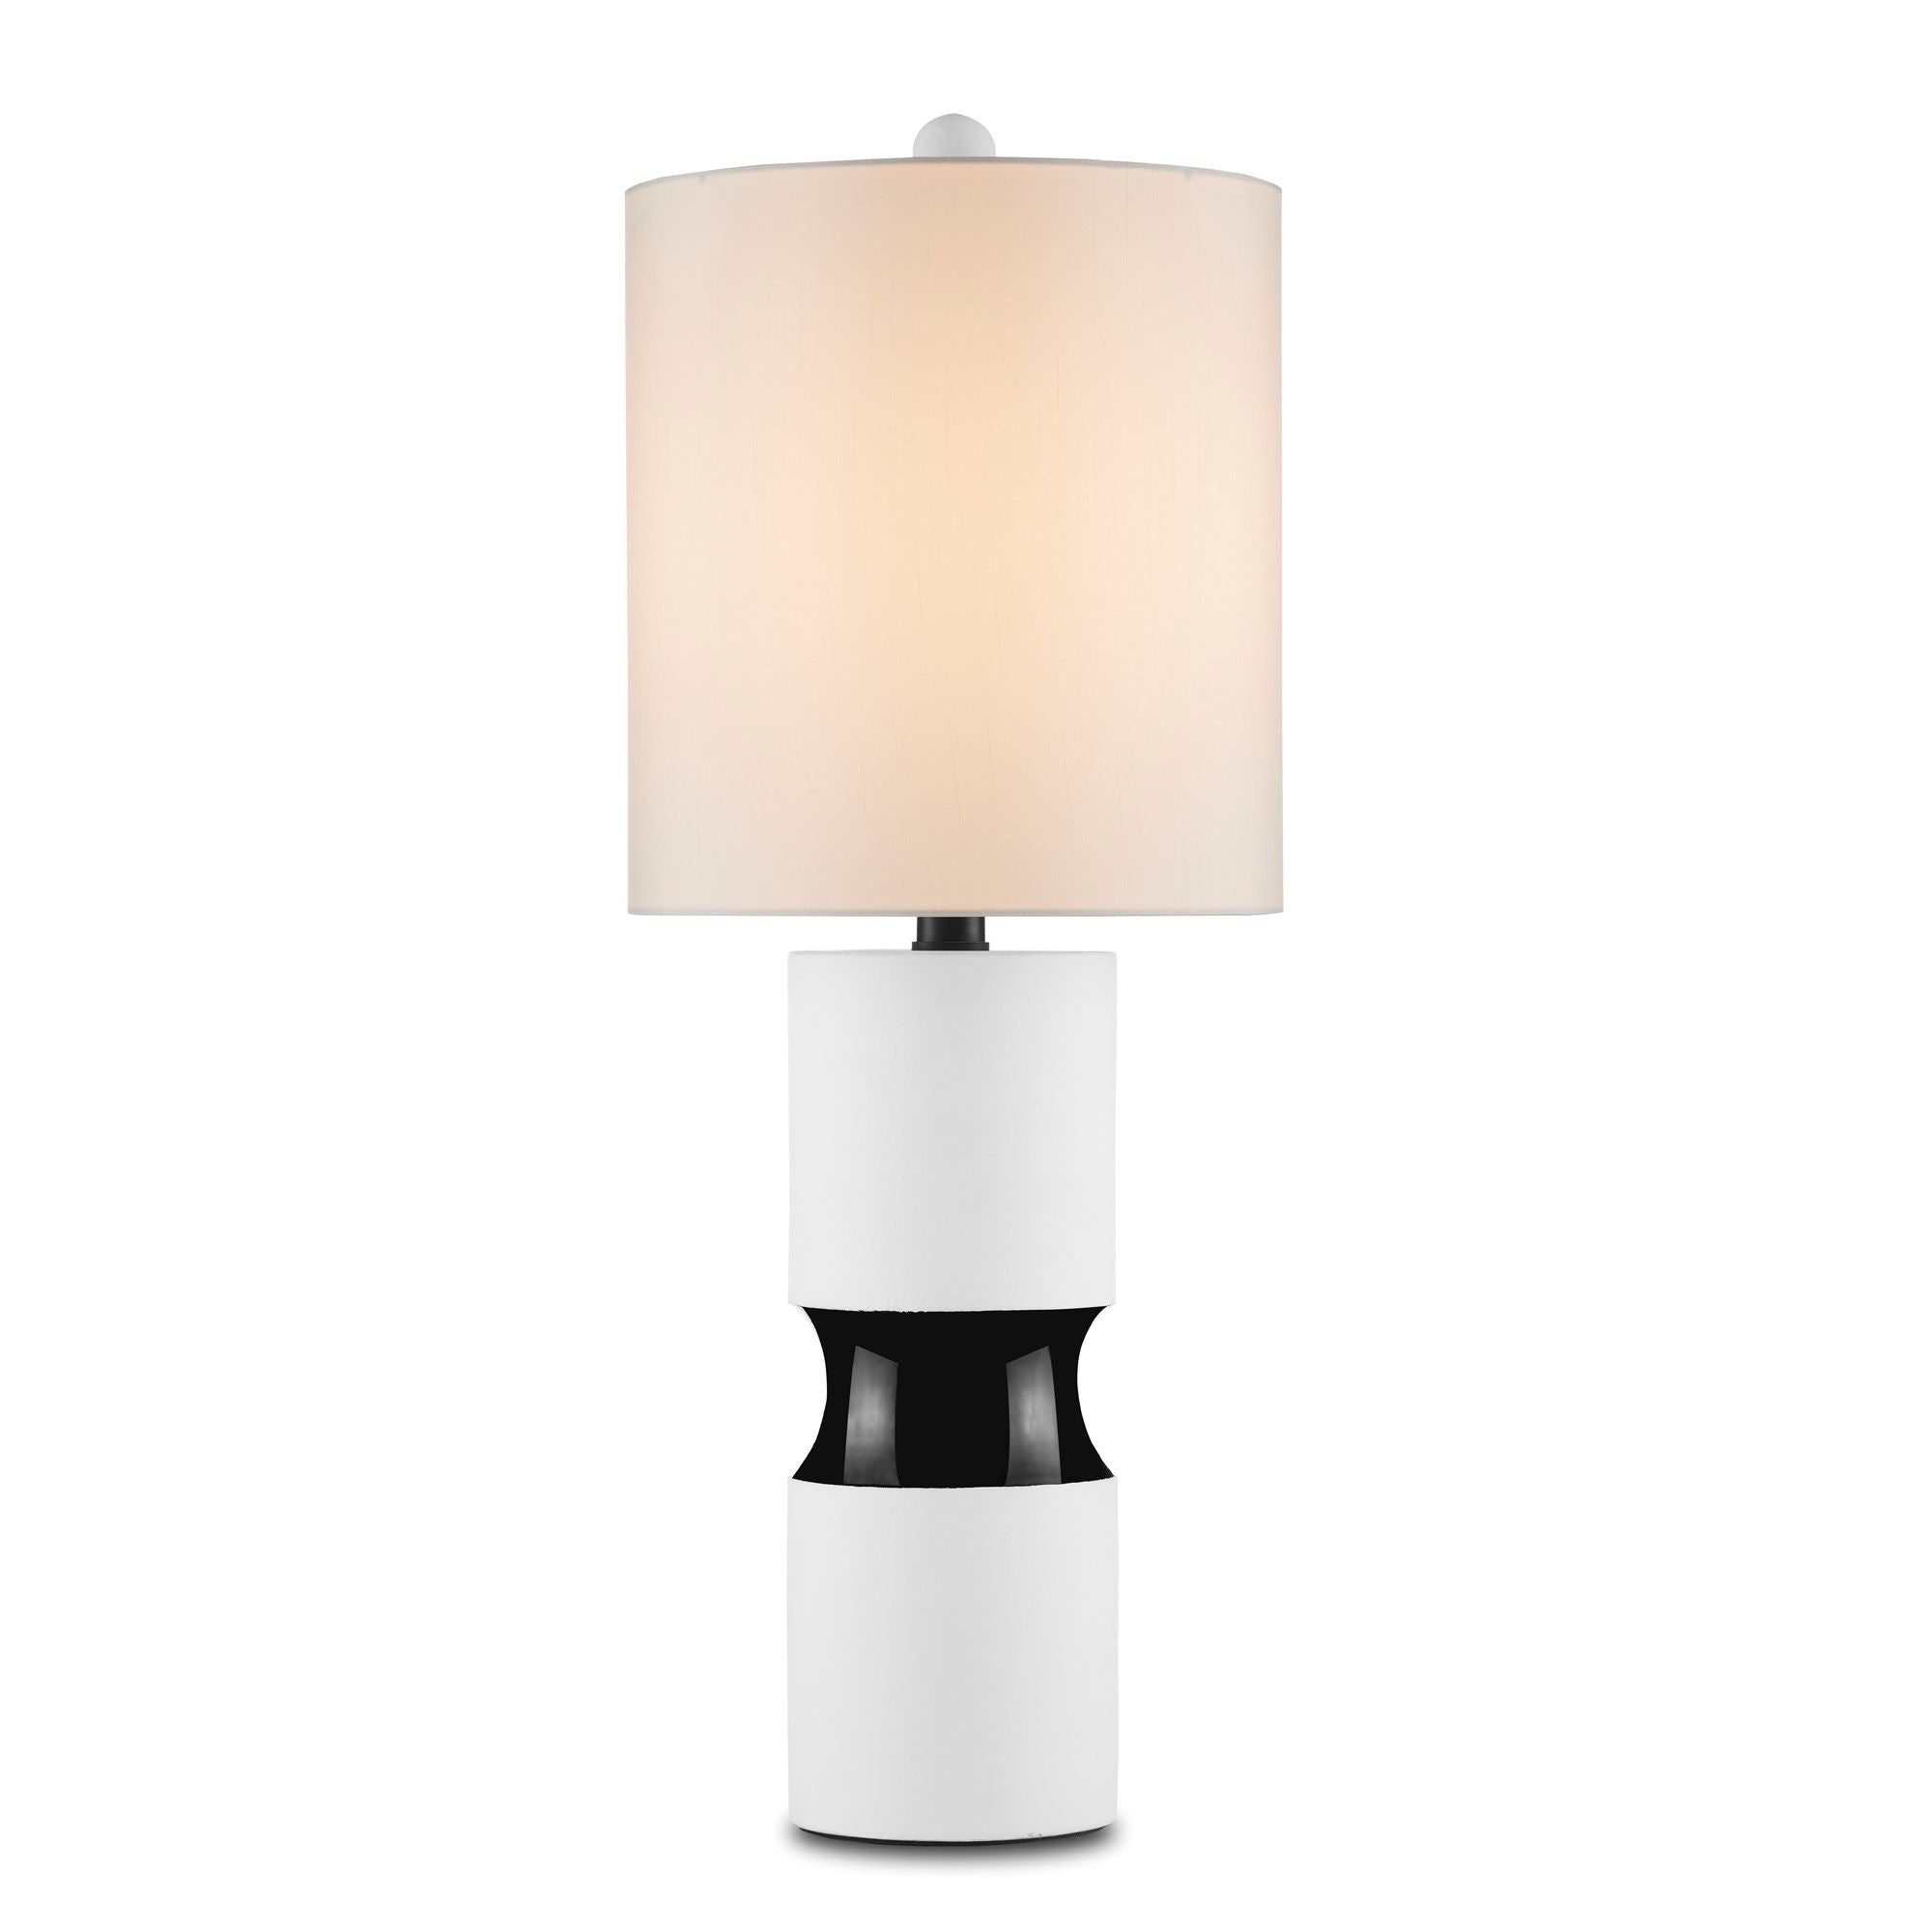 Althea Black & White Table Lamp - Off White/Black